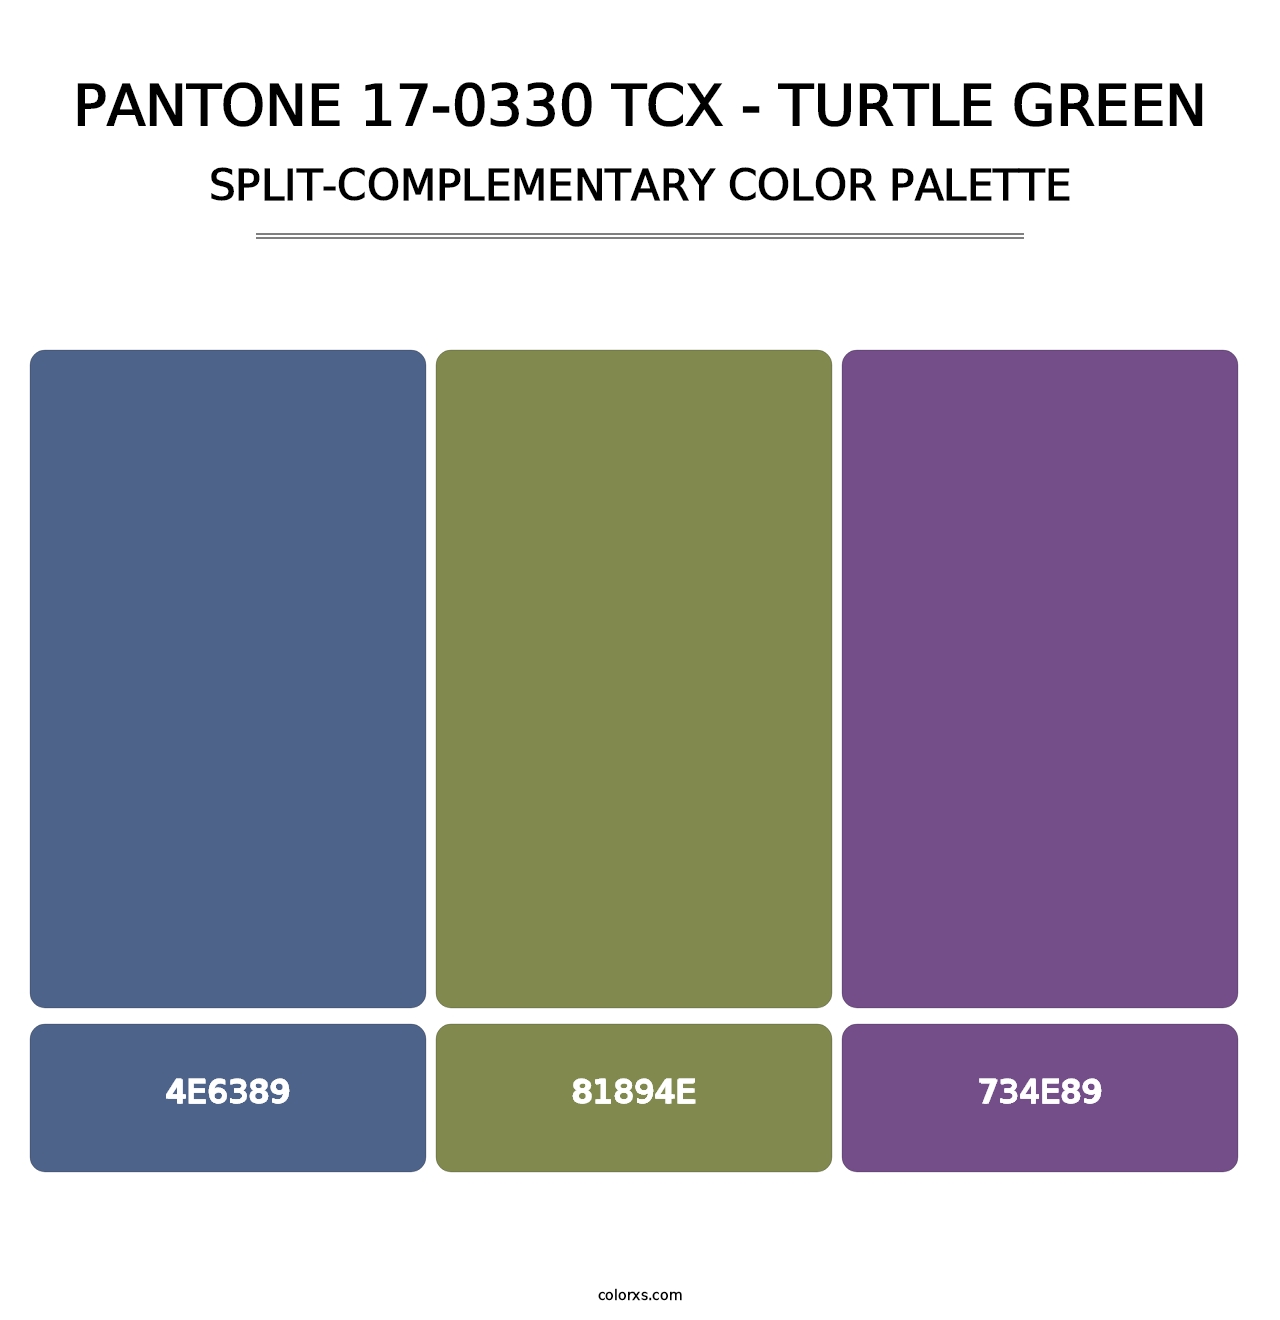 PANTONE 17-0330 TCX - Turtle Green - Split-Complementary Color Palette